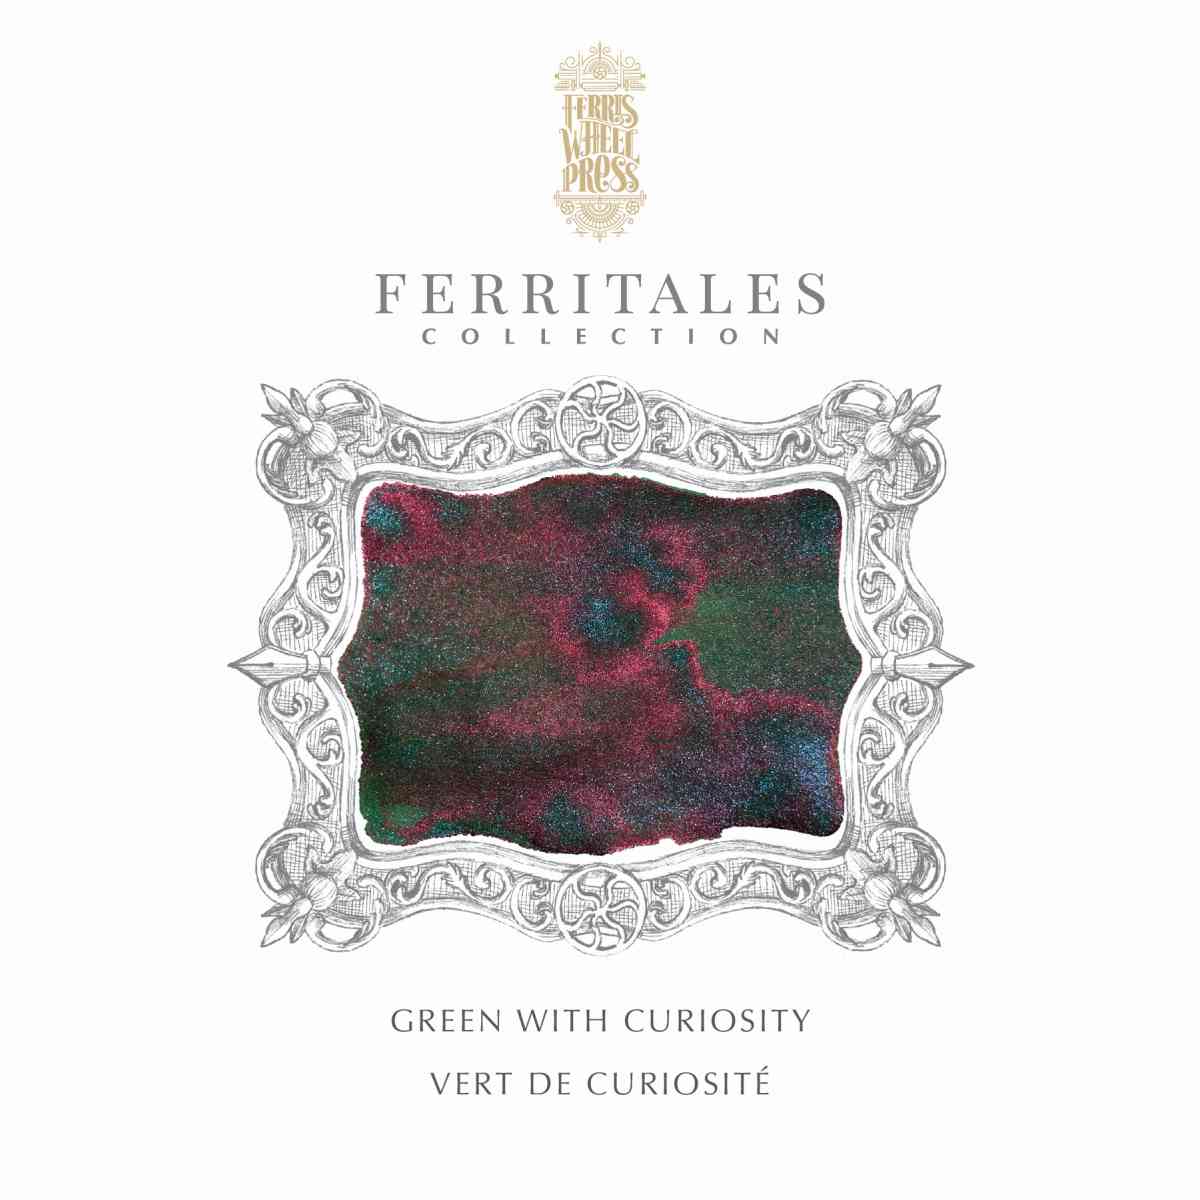 Ferris Wheel Press - Ferritales Ink - Green with Curiosity, 20 ml